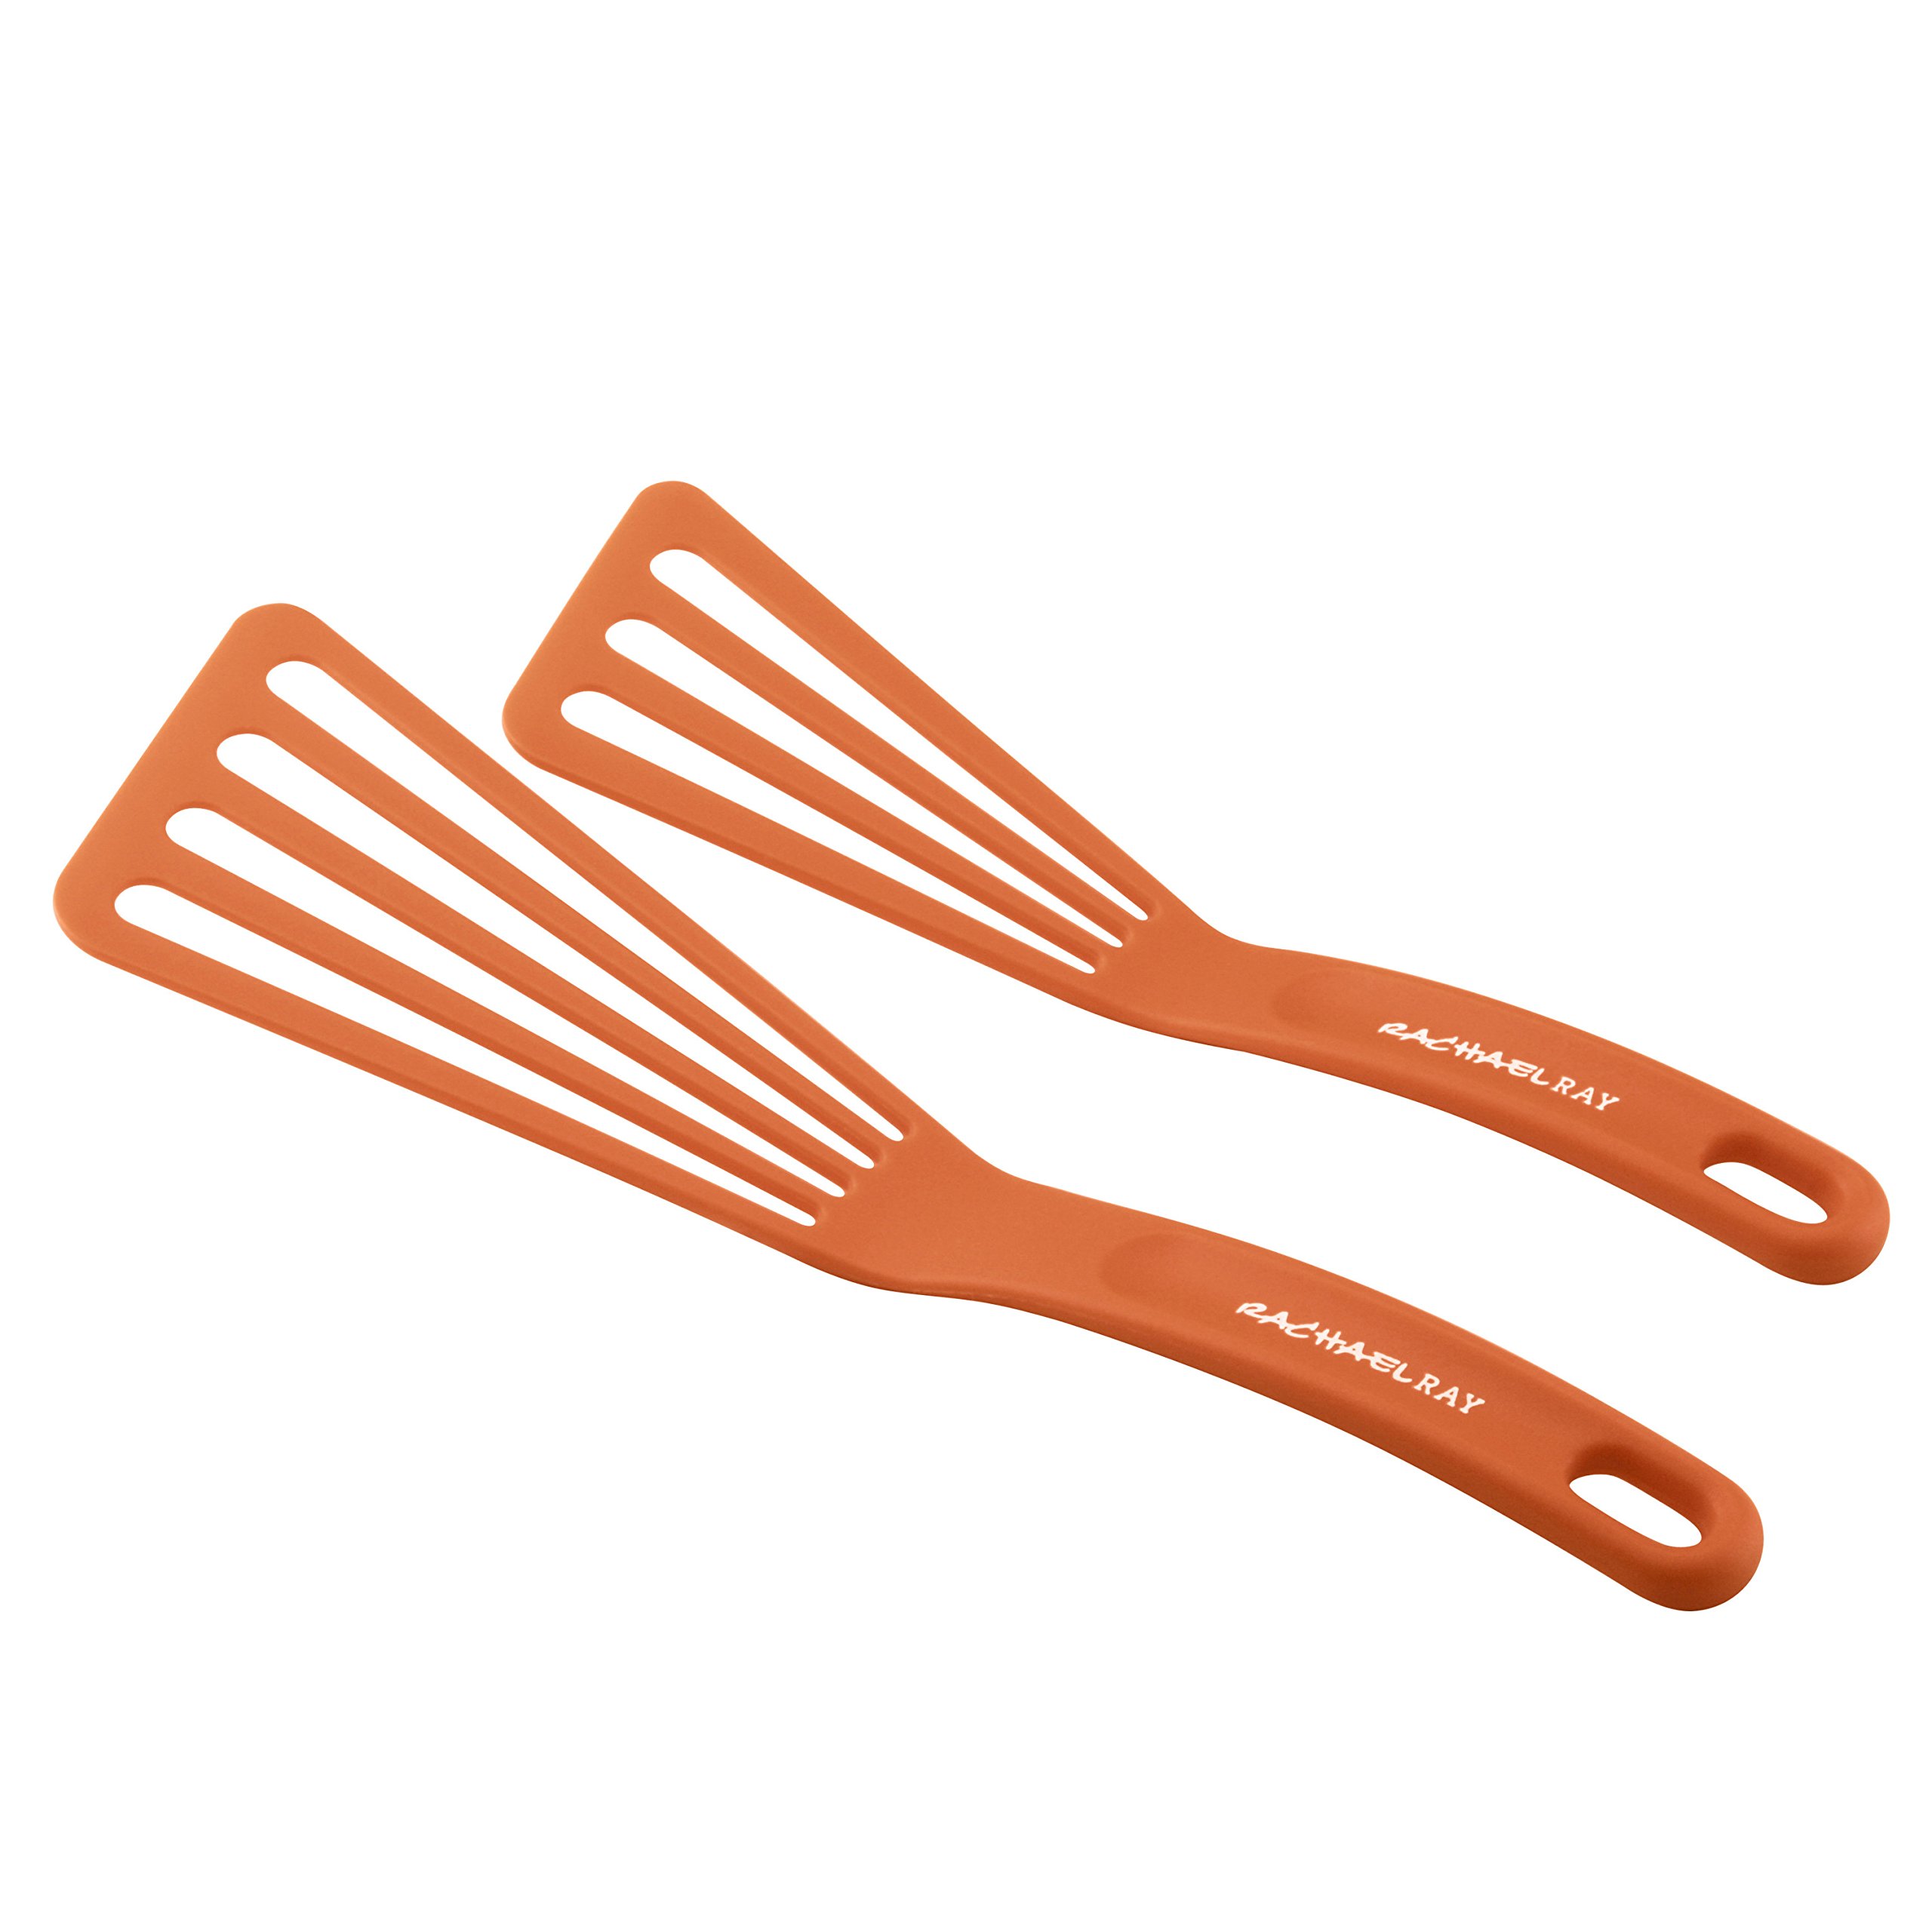 Rachael Ray Kitchen Tools and Gadgets Nylon Cooking Utensils/Spatula/Fish Turners, 2 Piece, Orange